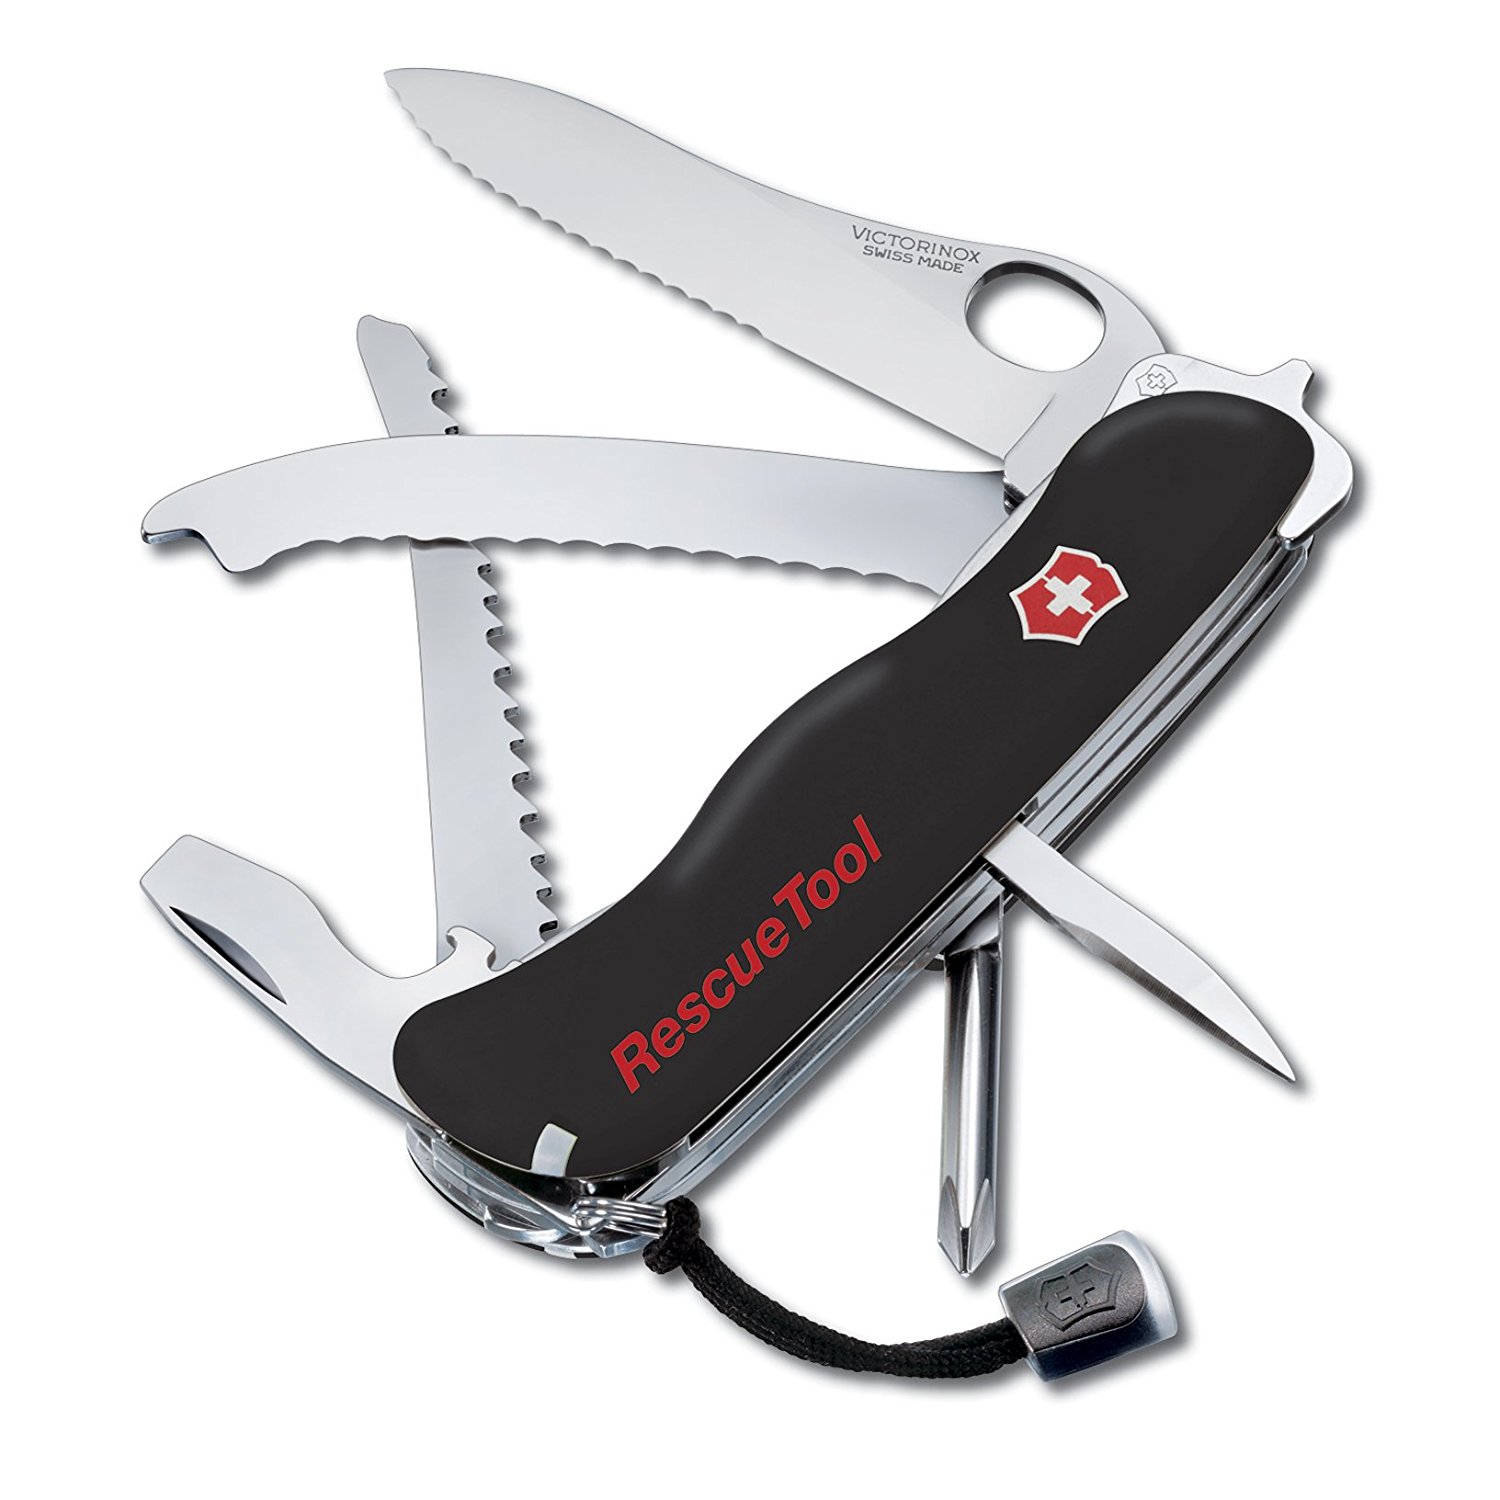 Amazon.com: Victorinox Swiss Army Rescue Tool Pocket Knife with ...